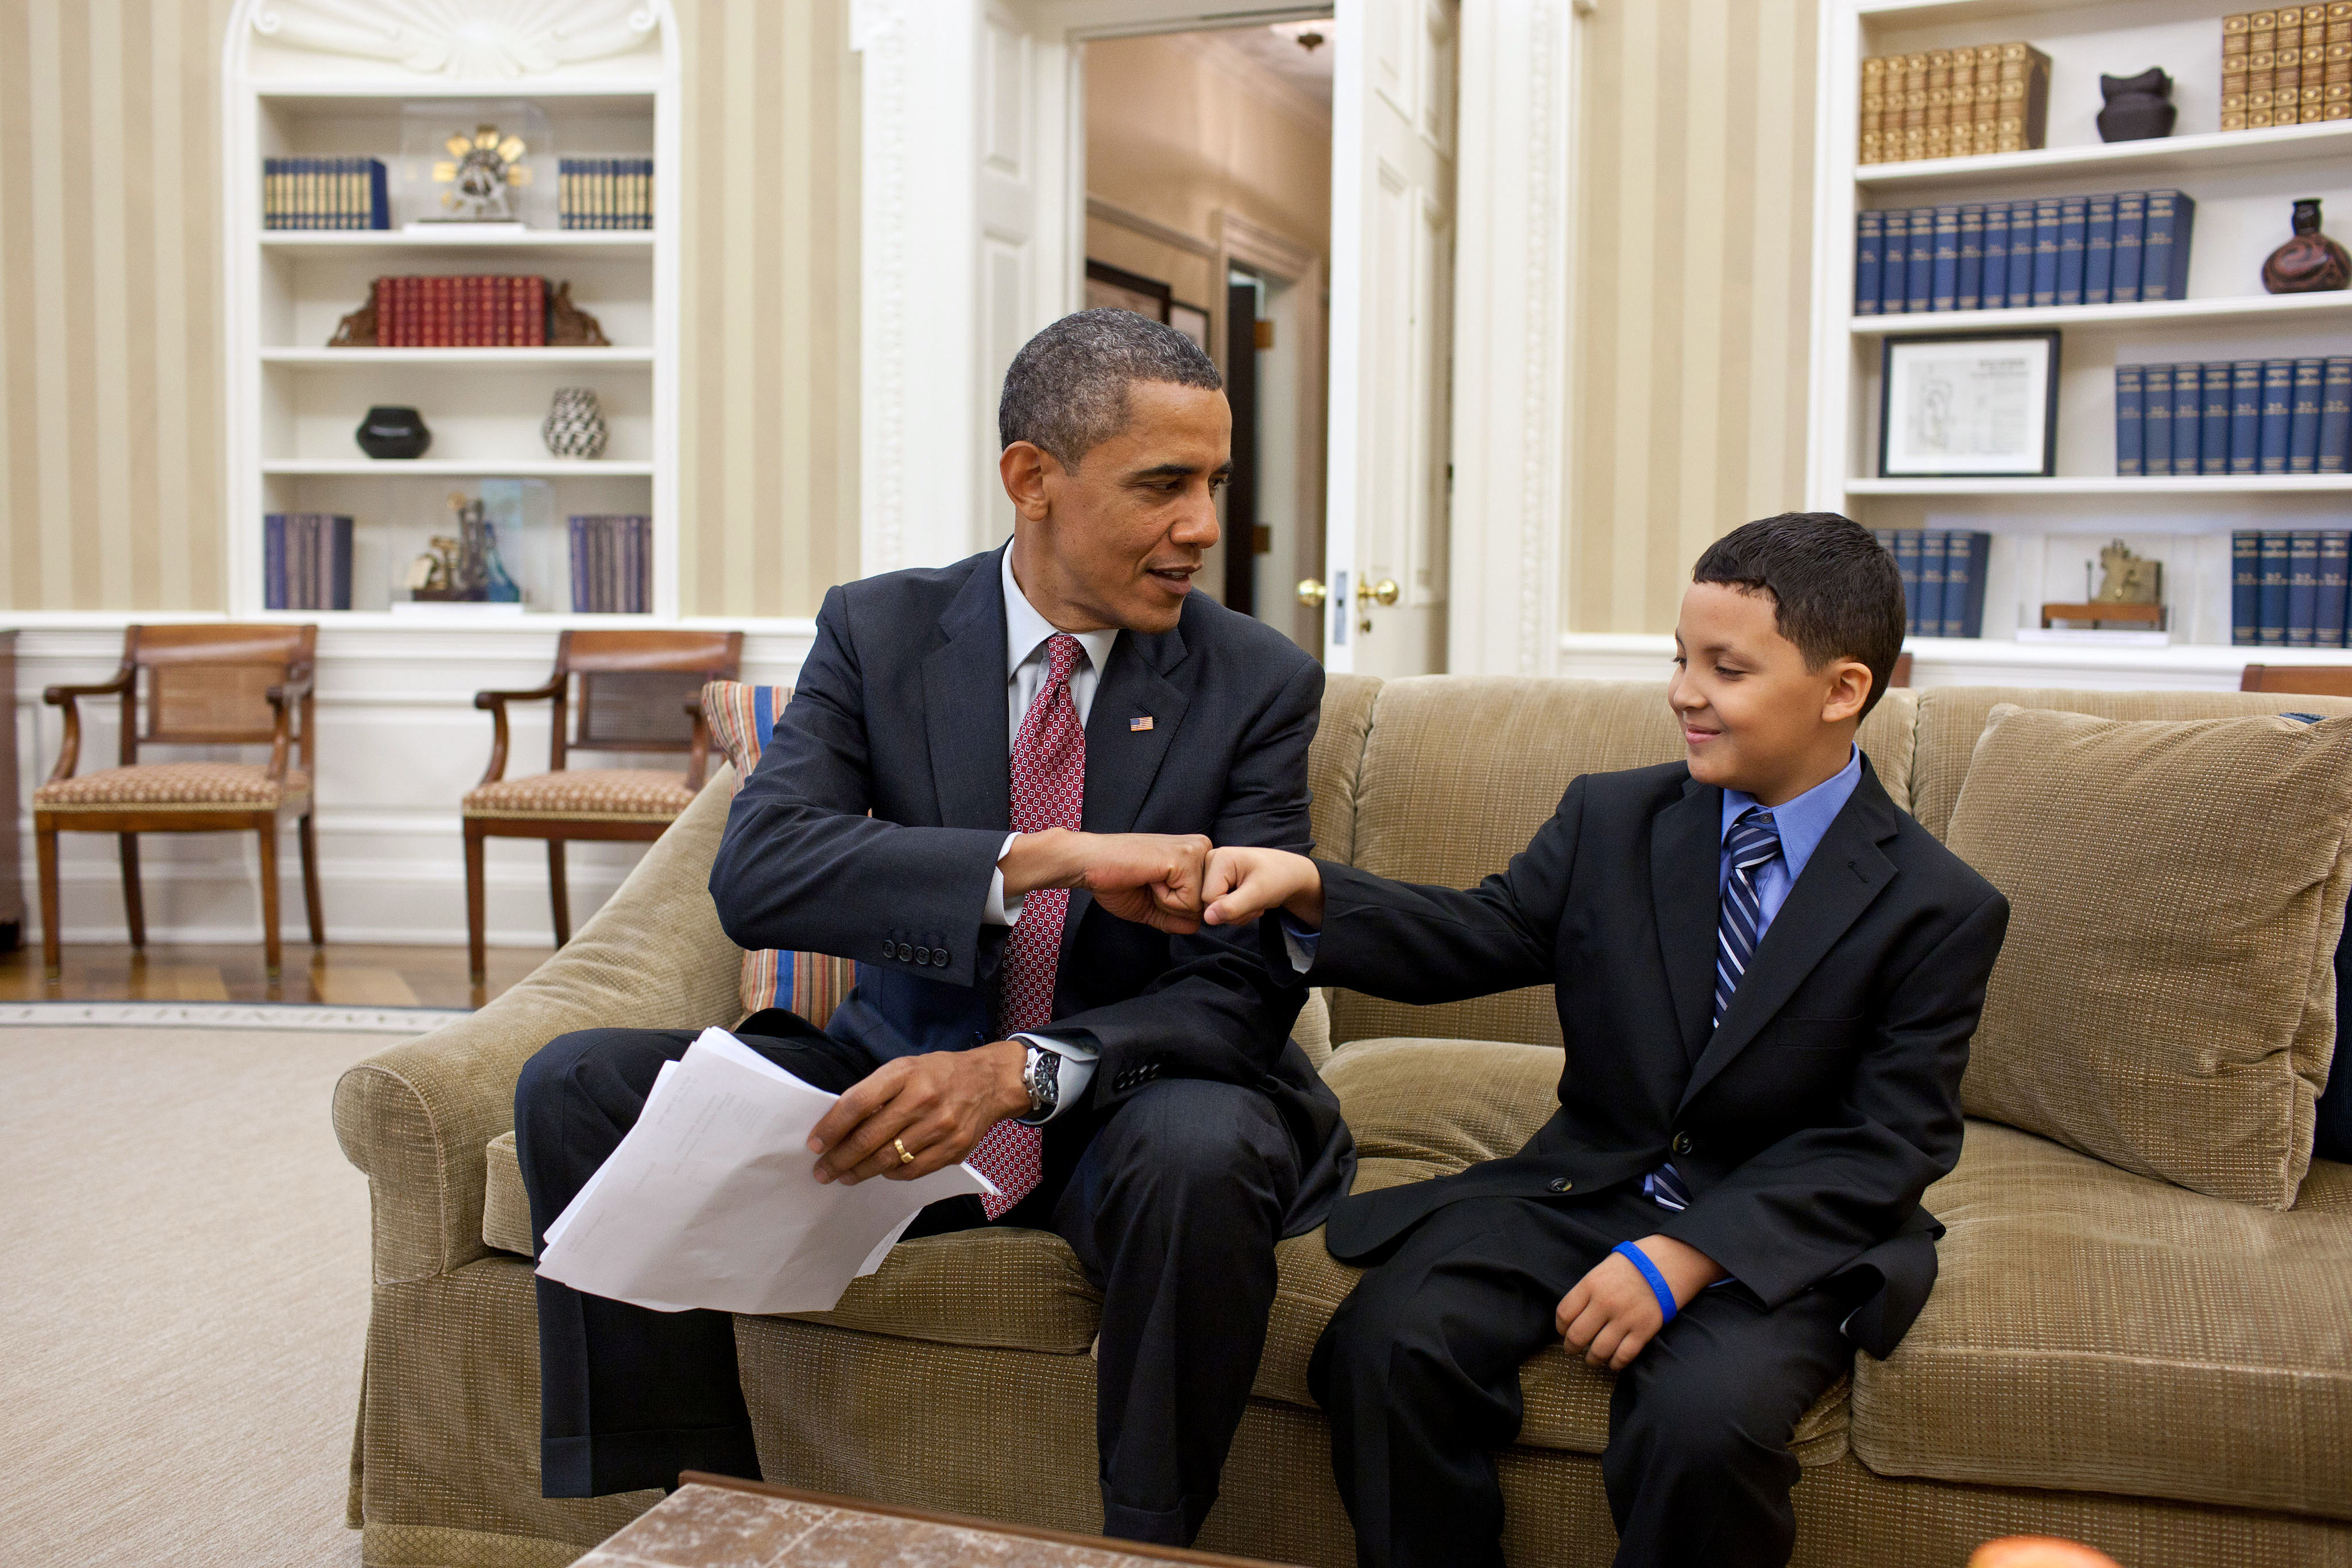 https://upload.wikimedia.org/wikipedia/commons/8/8a/President_Obama_greets_Make-a-Wish_child_Diego_Diaz_-_June_23_2011.jpg